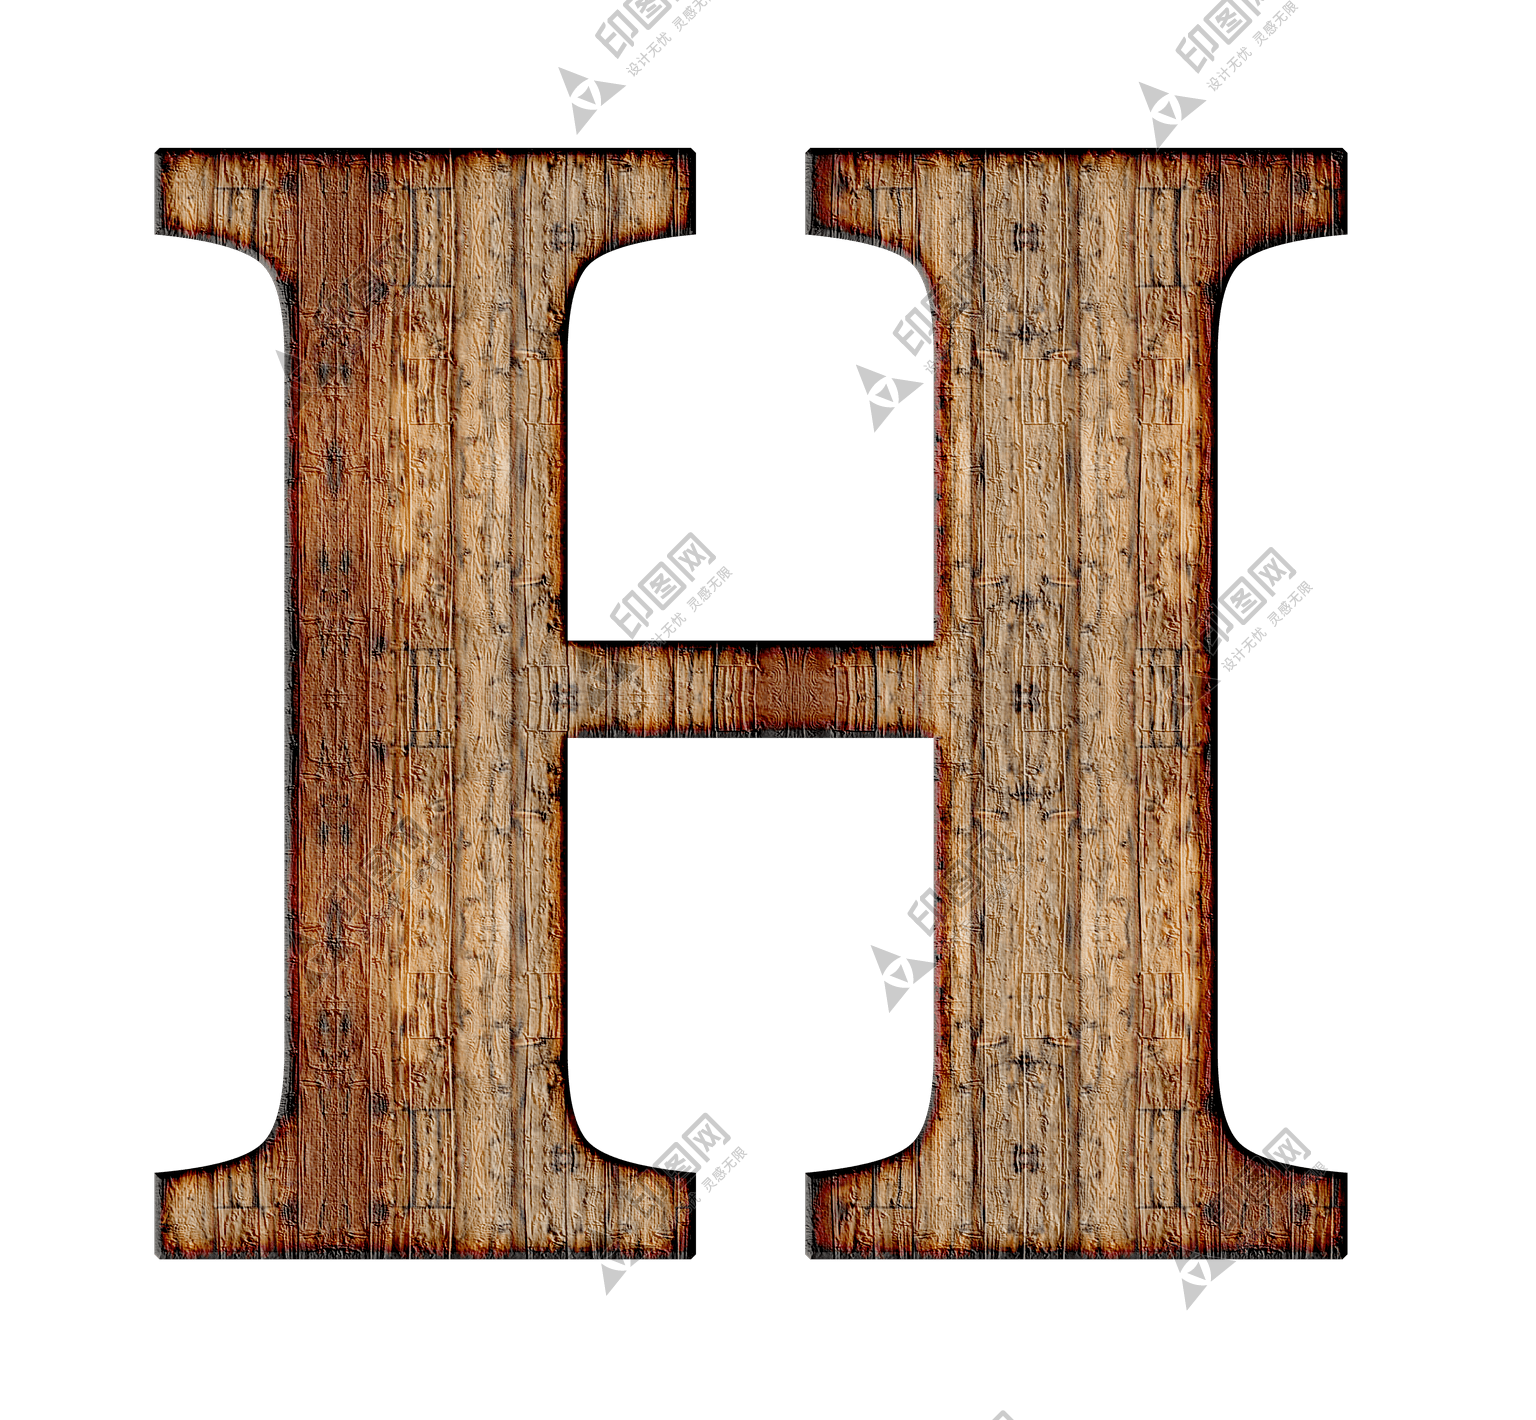 标点符号_字母_H字母_letter_h